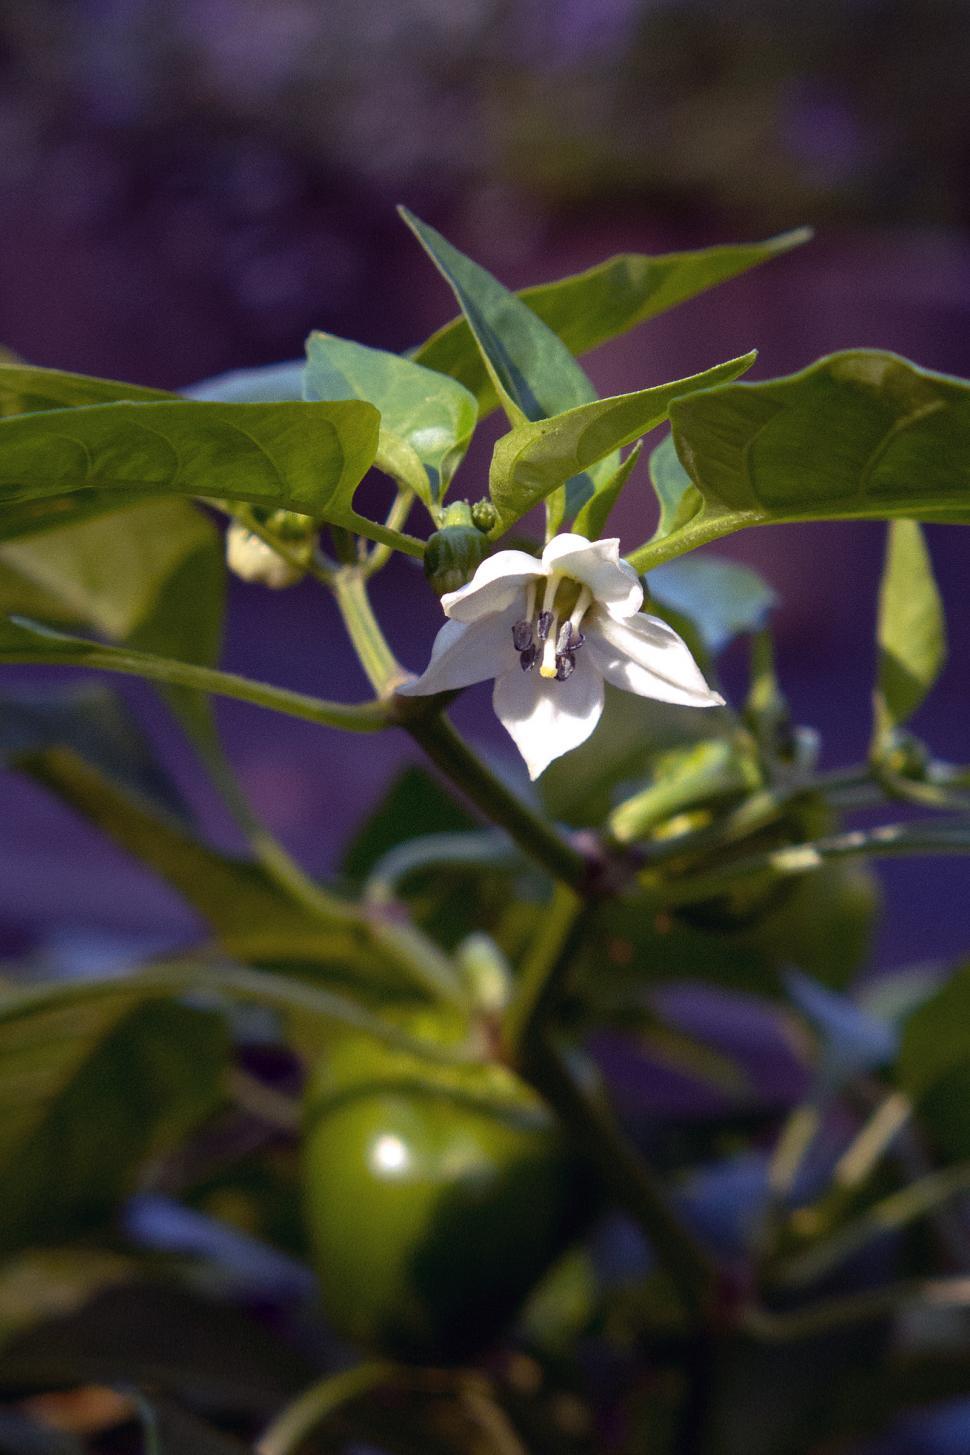 Free Image of Bell Pepper Plant Flower 